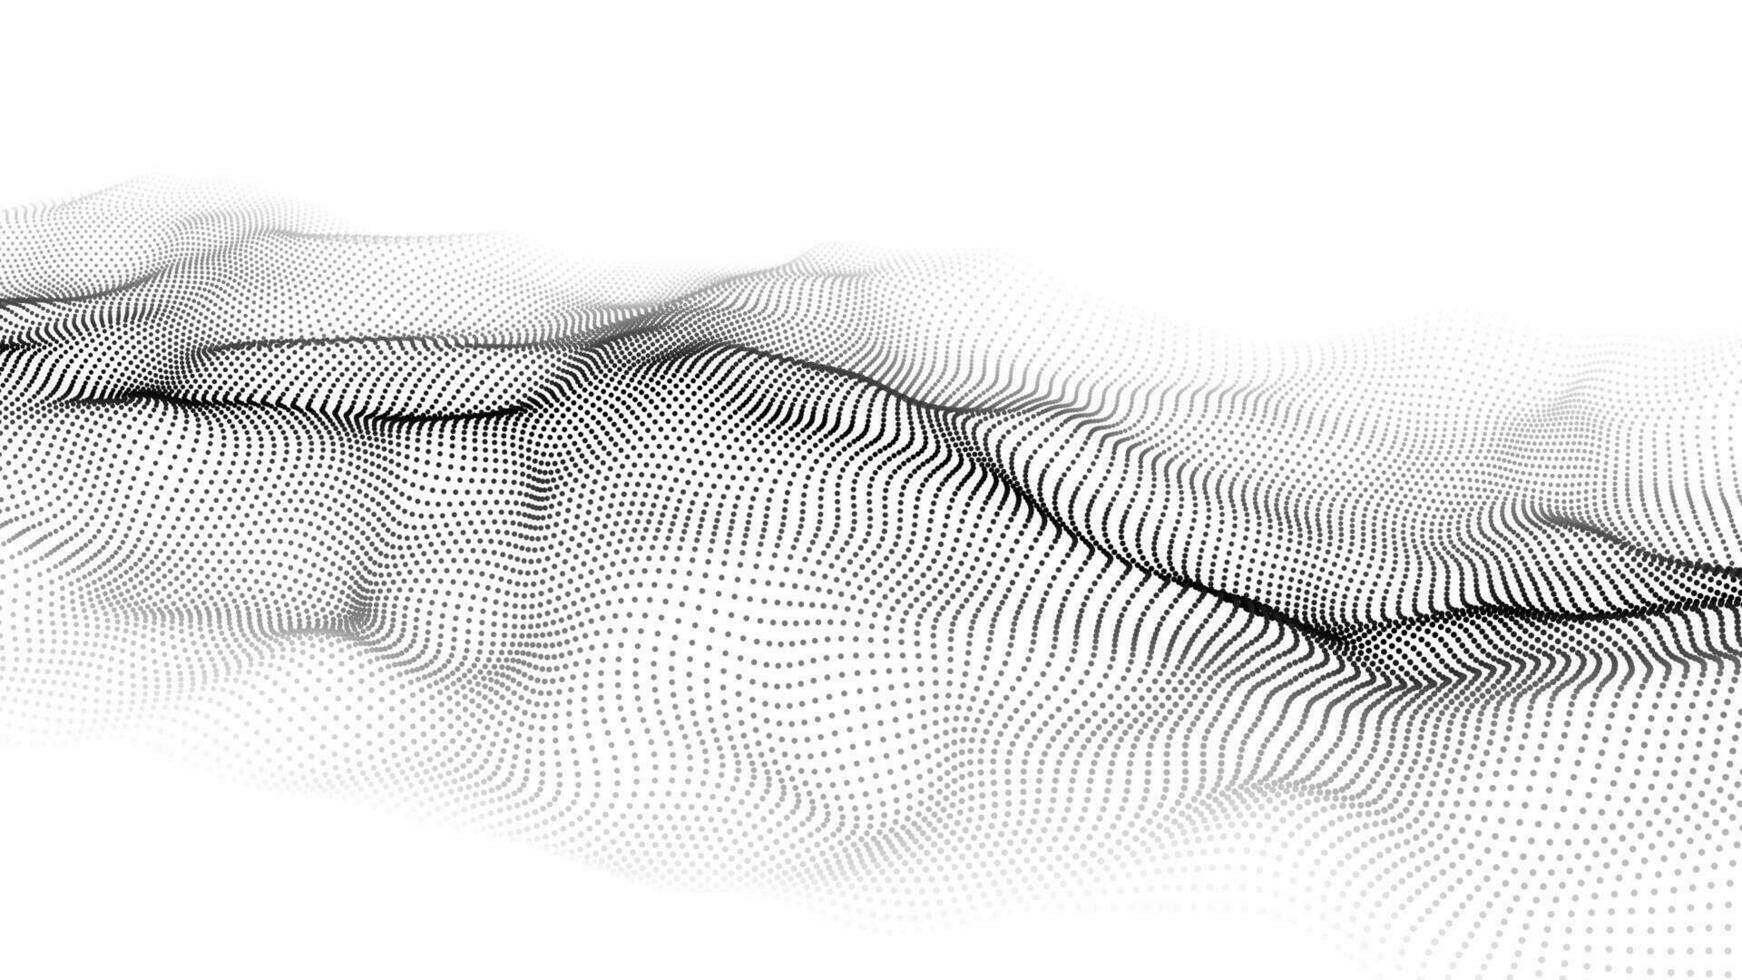 en Vinka av partiklar. abstrakt ljus bakgrund med dynamisk Vinka. de begrepp av teknologisk bakgrund. stor data. vektor illustration.